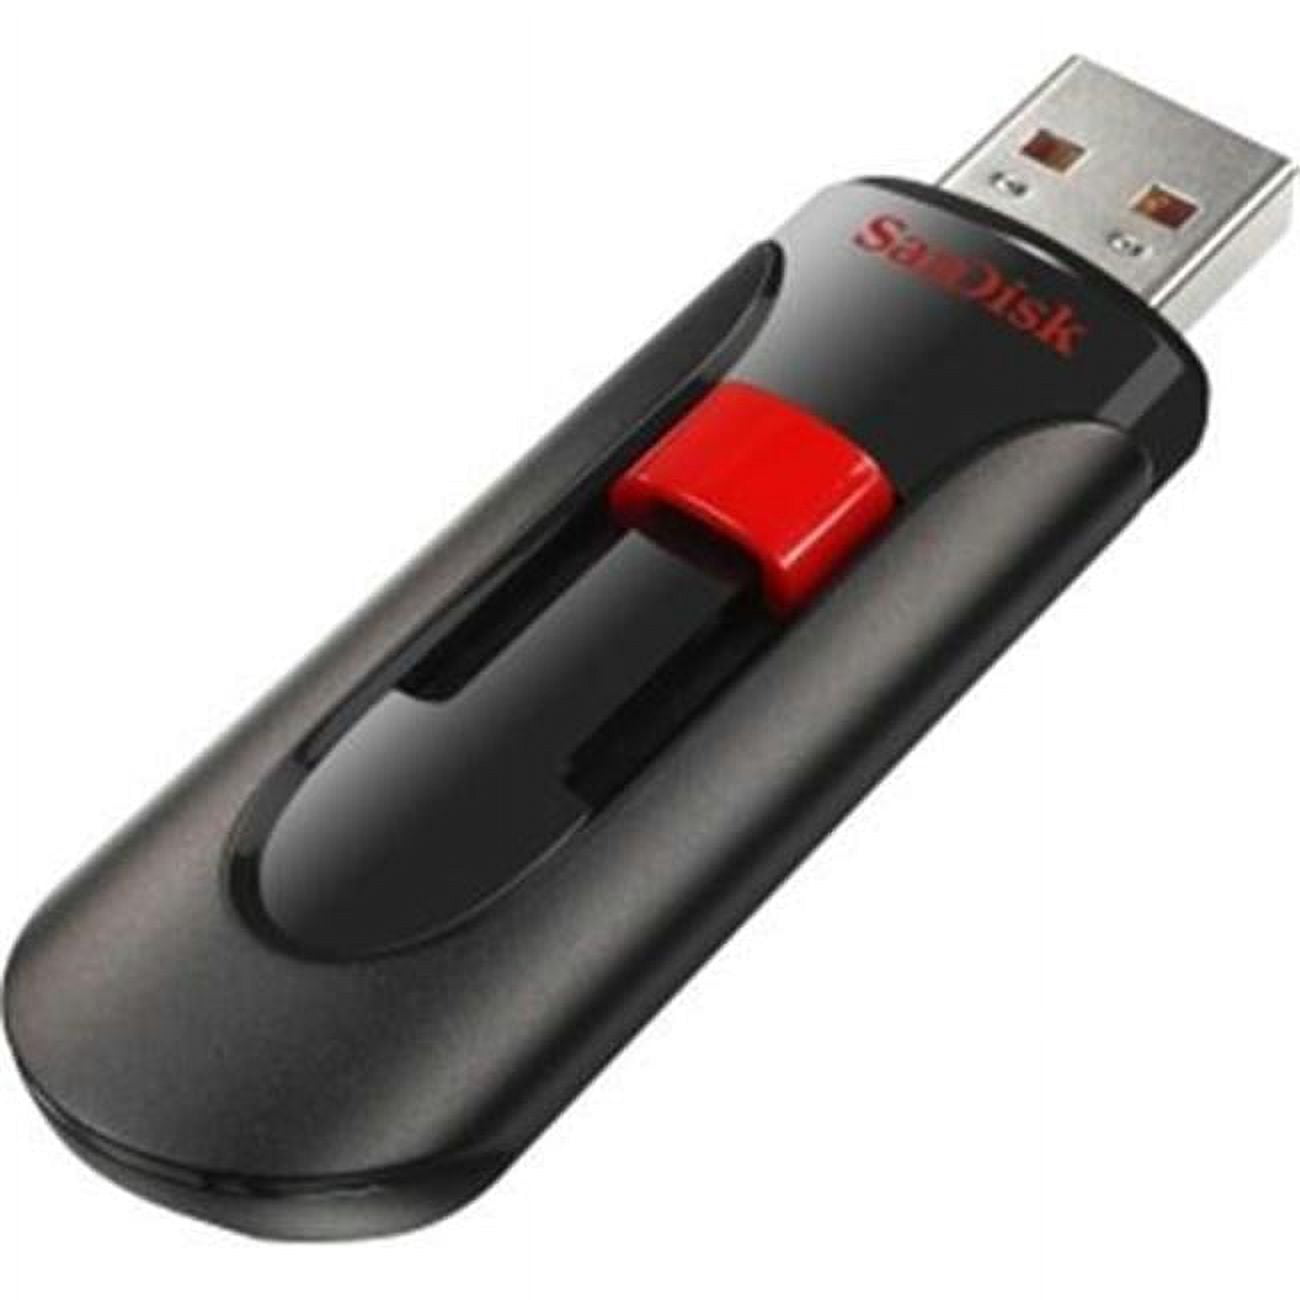 SanDisk USB Flash Drives